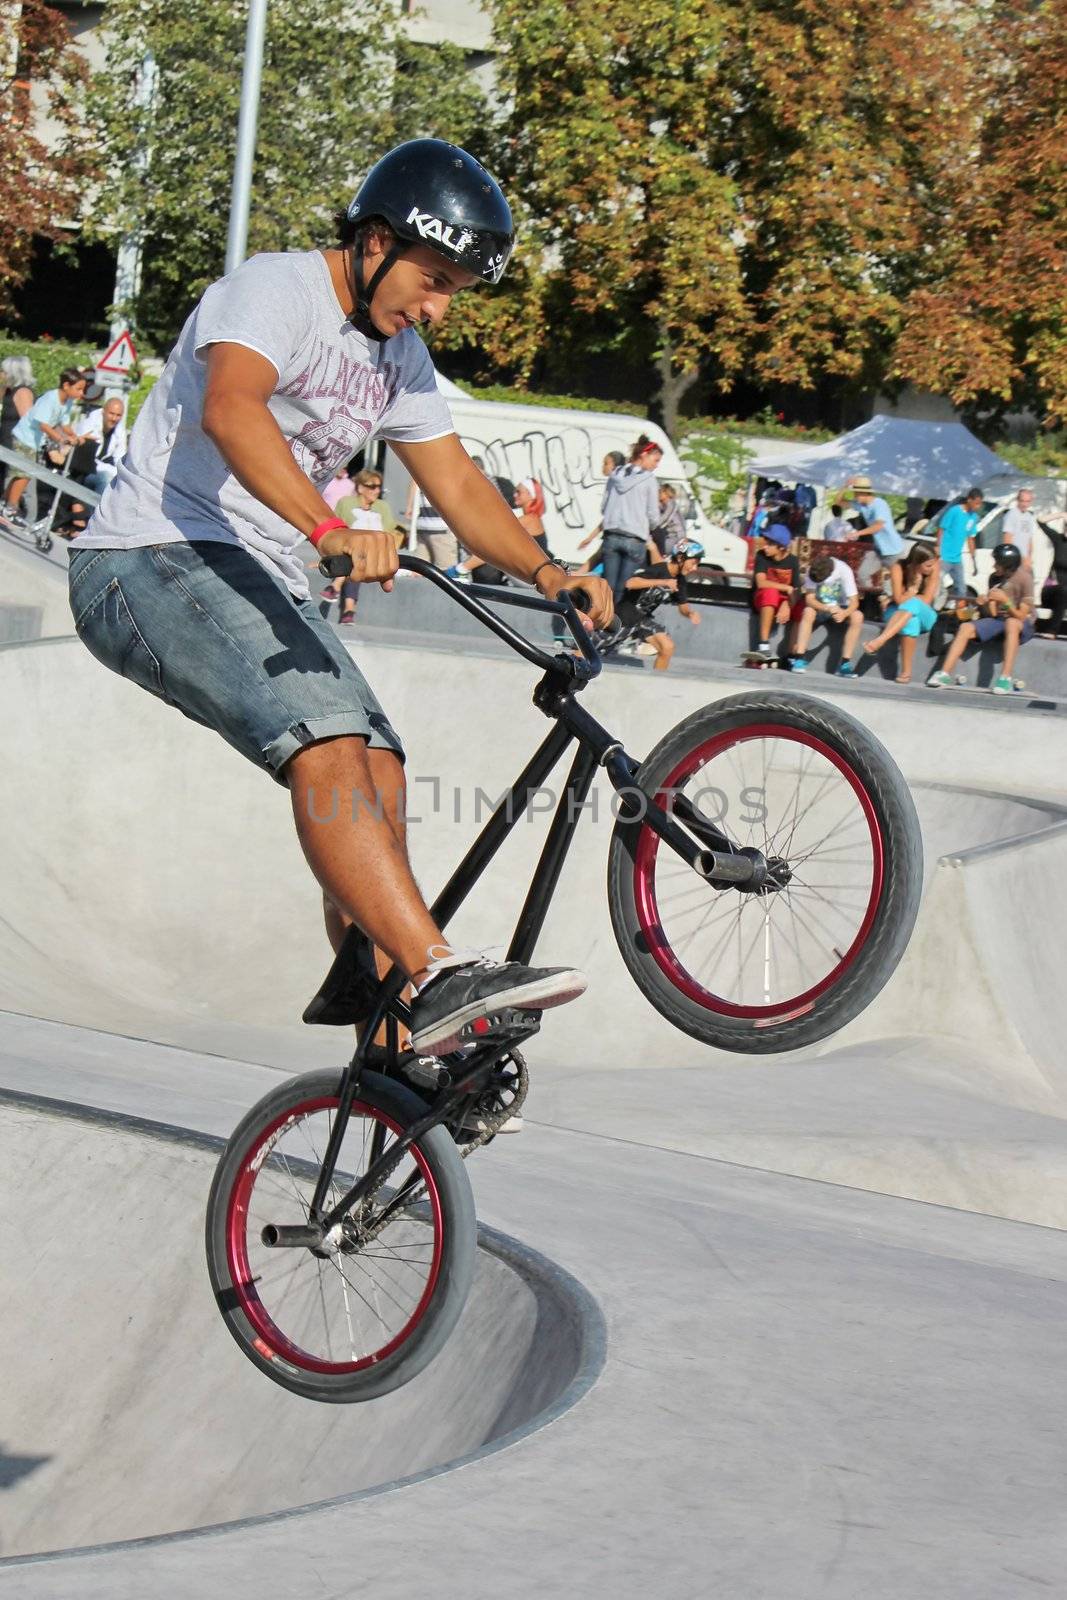 Biker at the brand new skate park, Geneva, Switzerland by Elenaphotos21